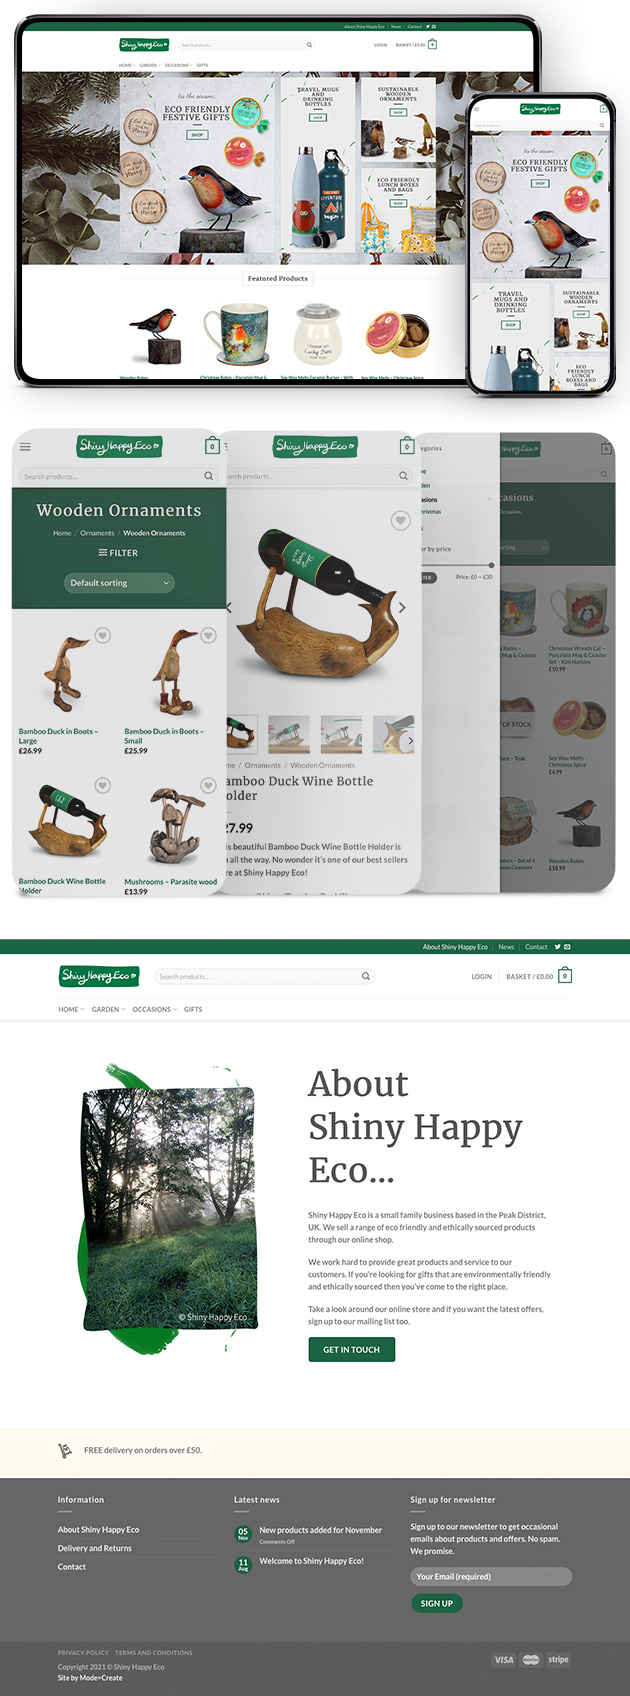 Website design for Shiny Happy Eco.